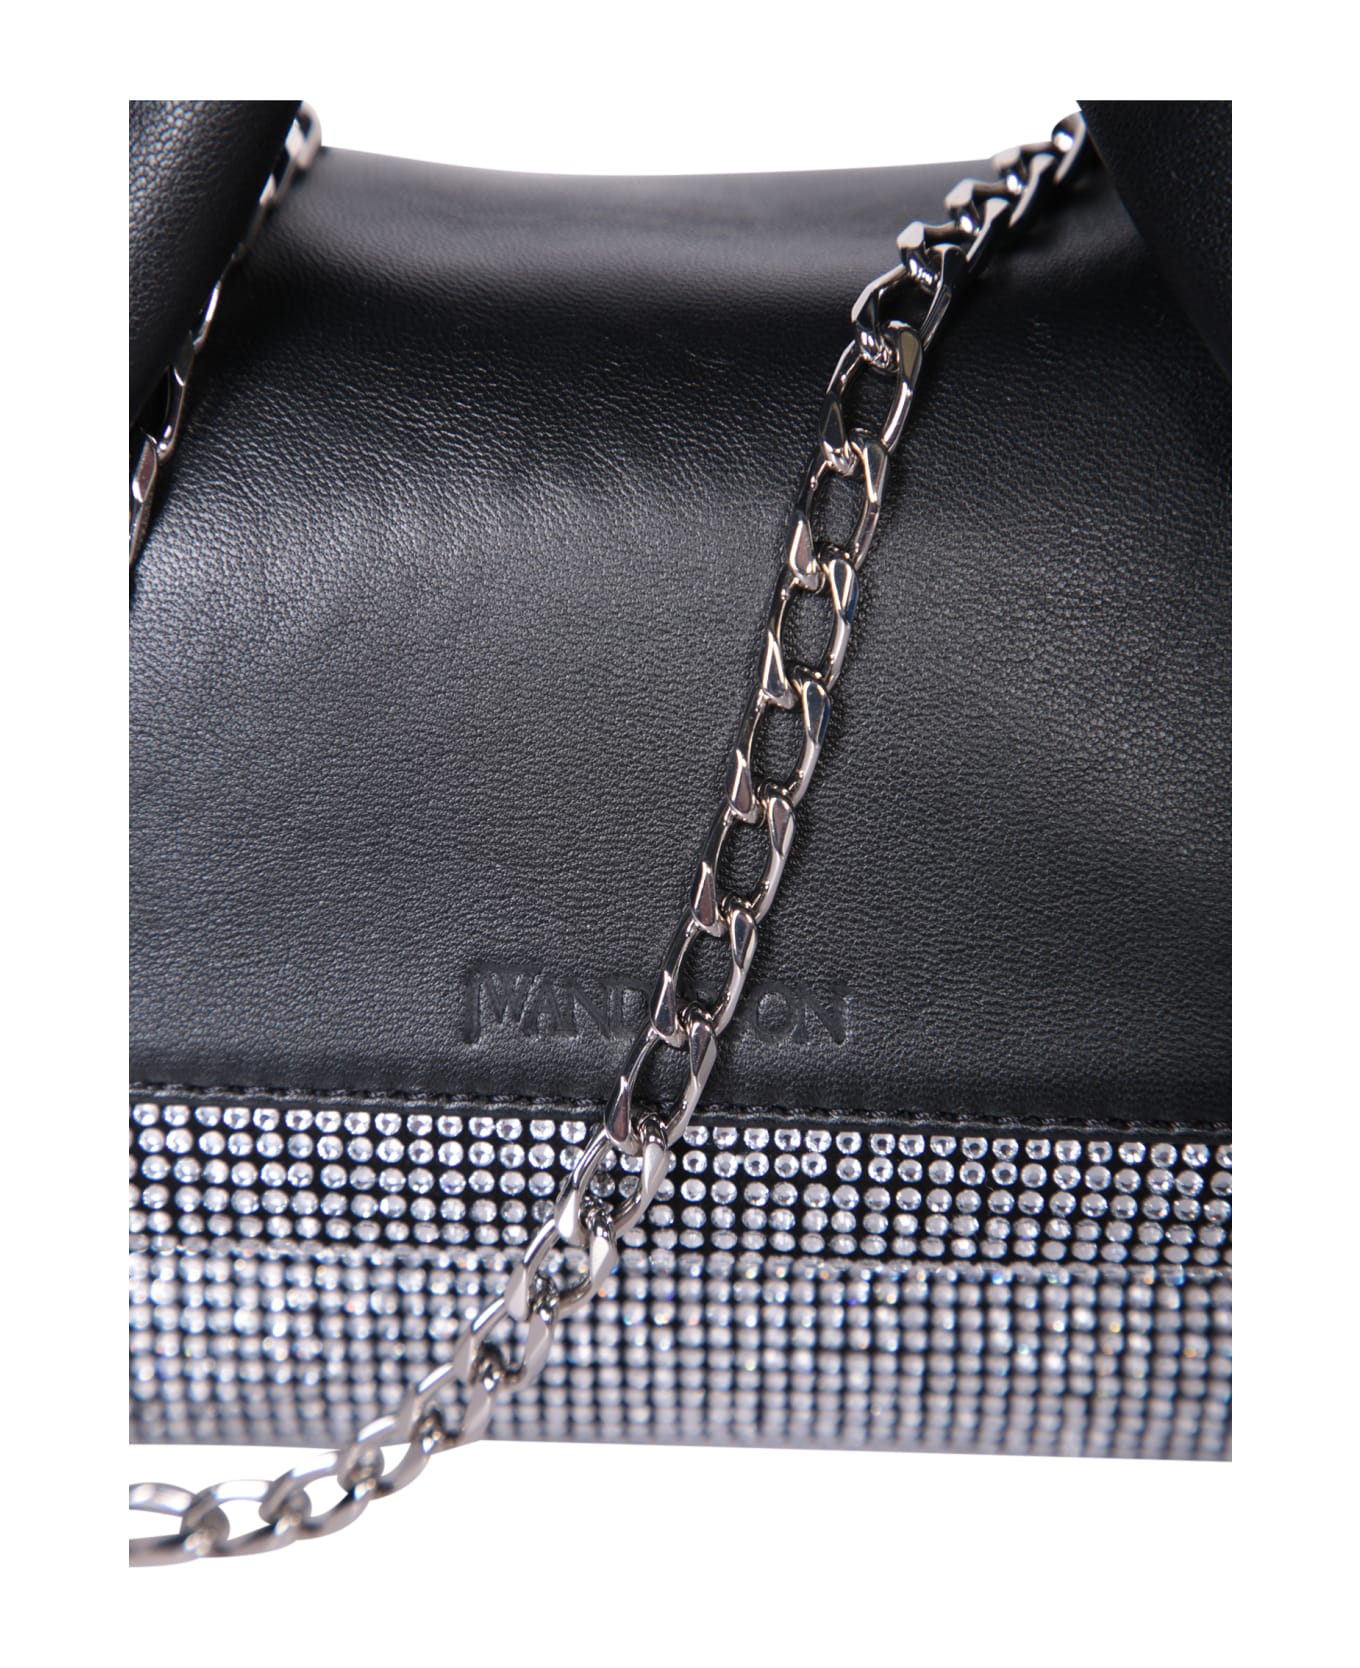 J.W. Anderson 'crystal Twister' Small Handbag - BLACK